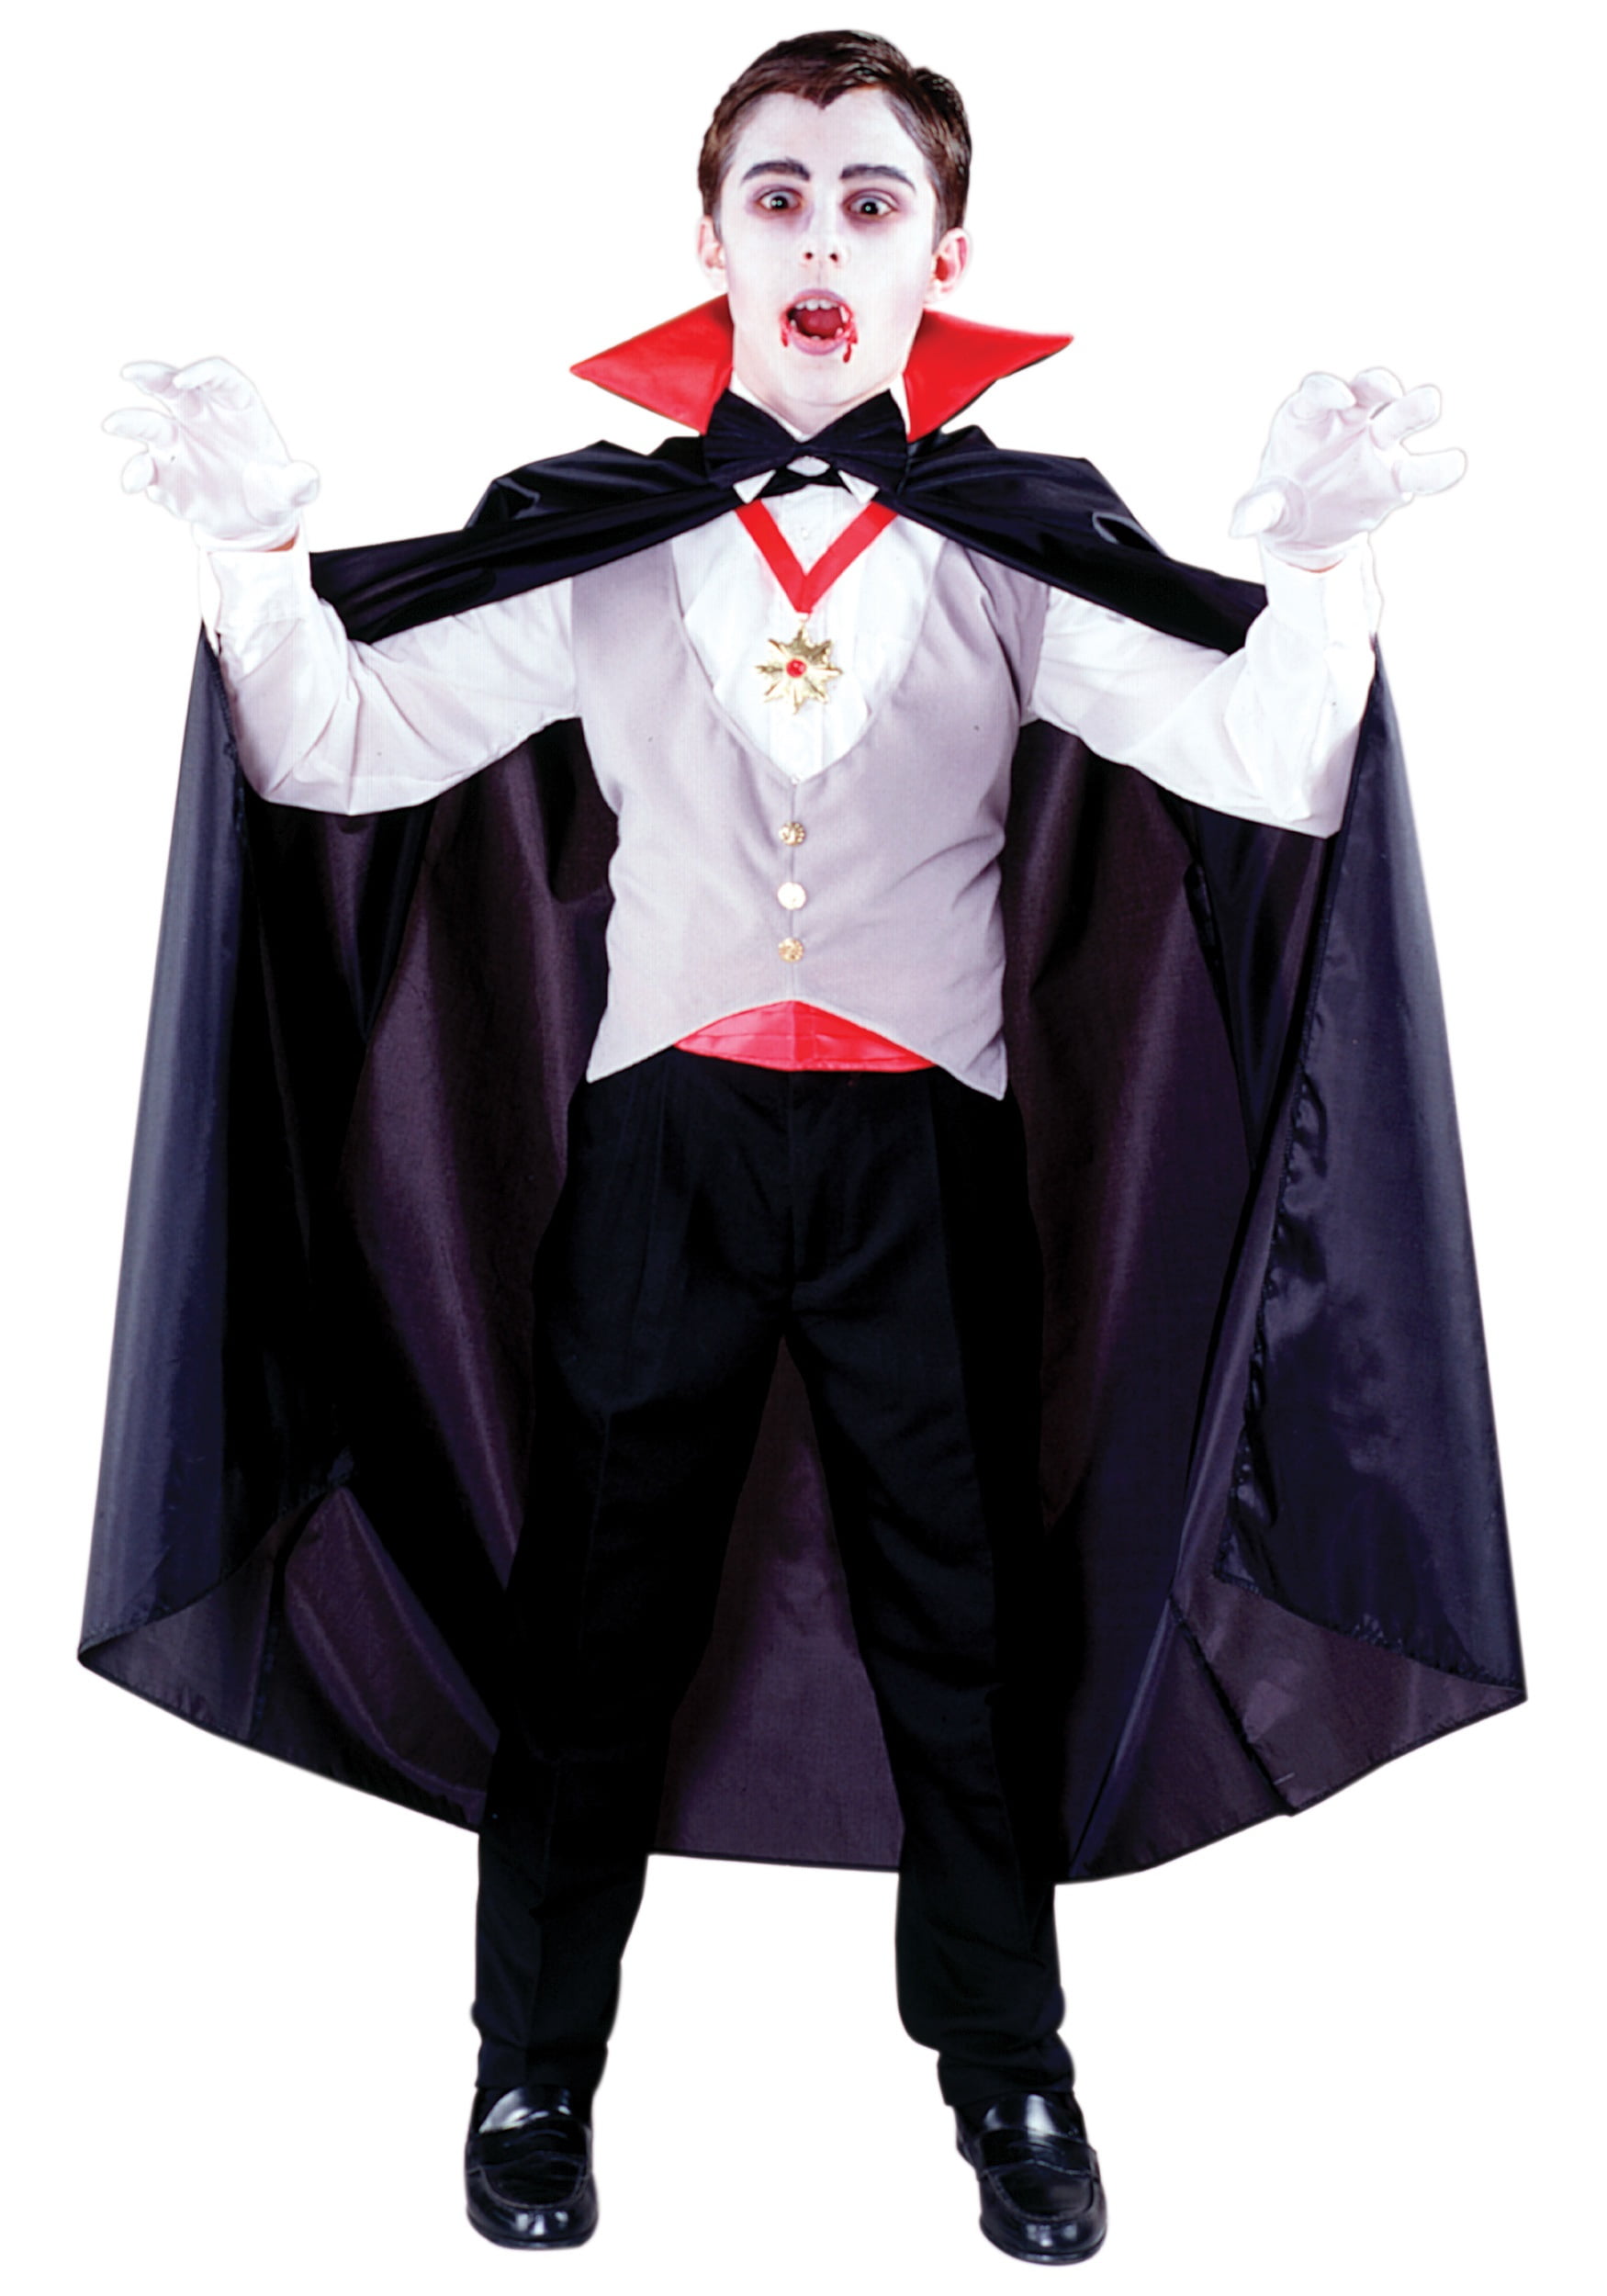 Включи вампир человек. Костюм Дракулы. Dracula костюм для мальчика. Пт1276 костюм вампира Классик.